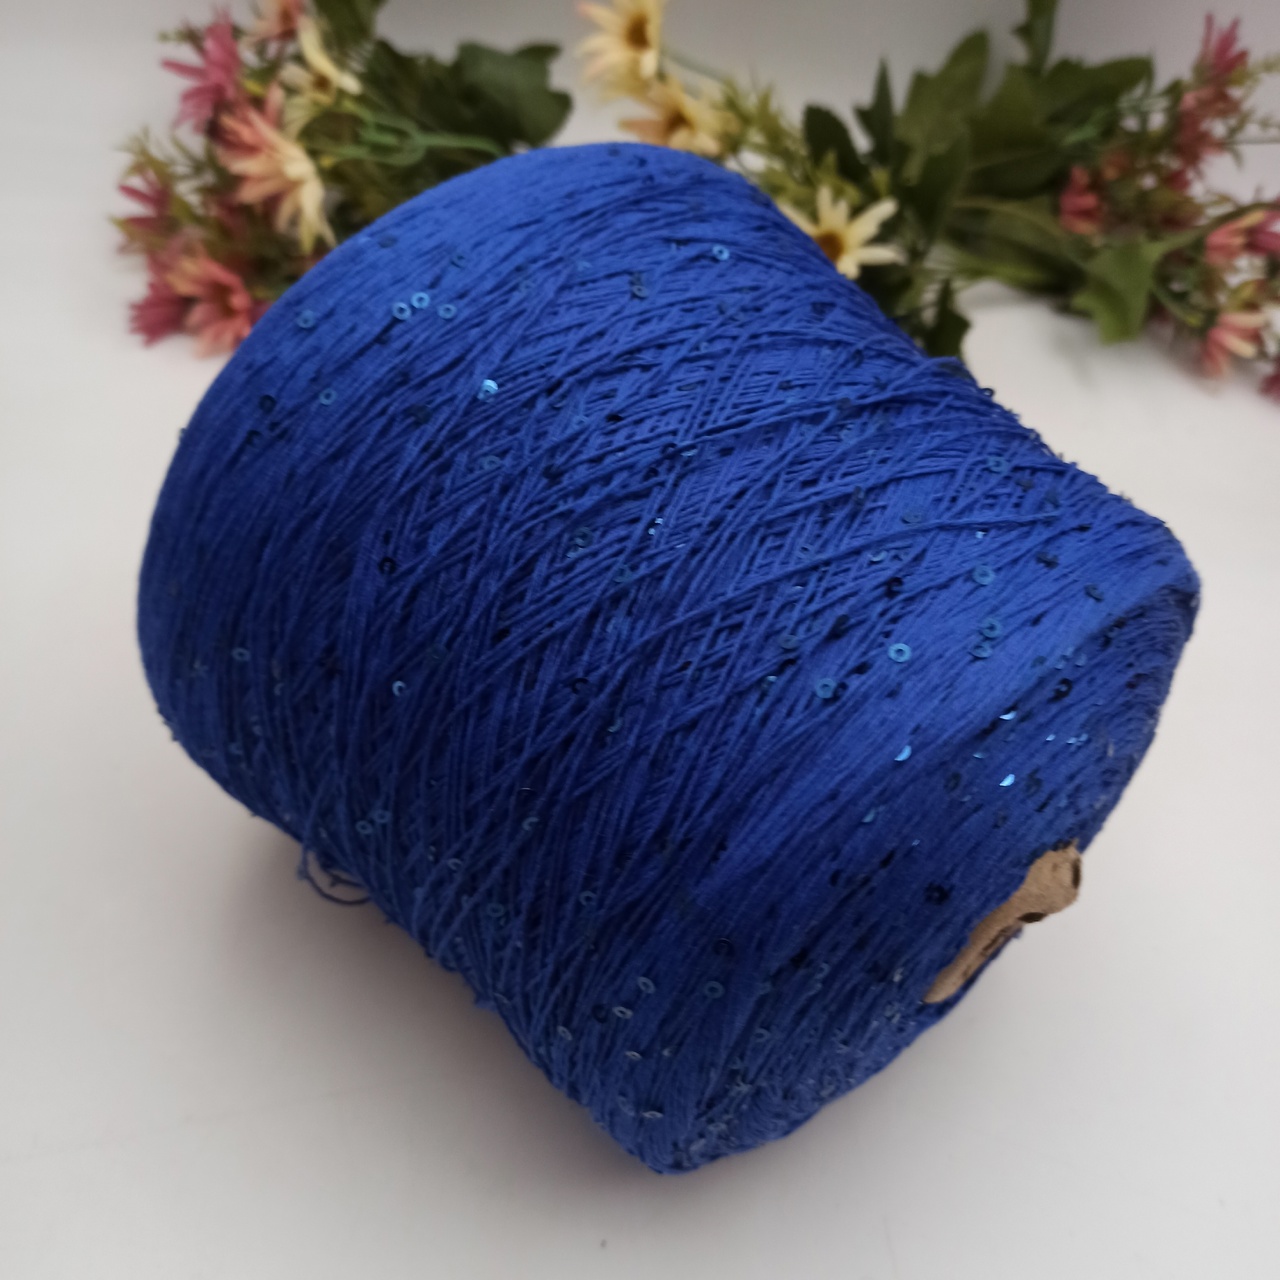 Cotton Stellar - 006 Королевский синий, пайетка 3мм